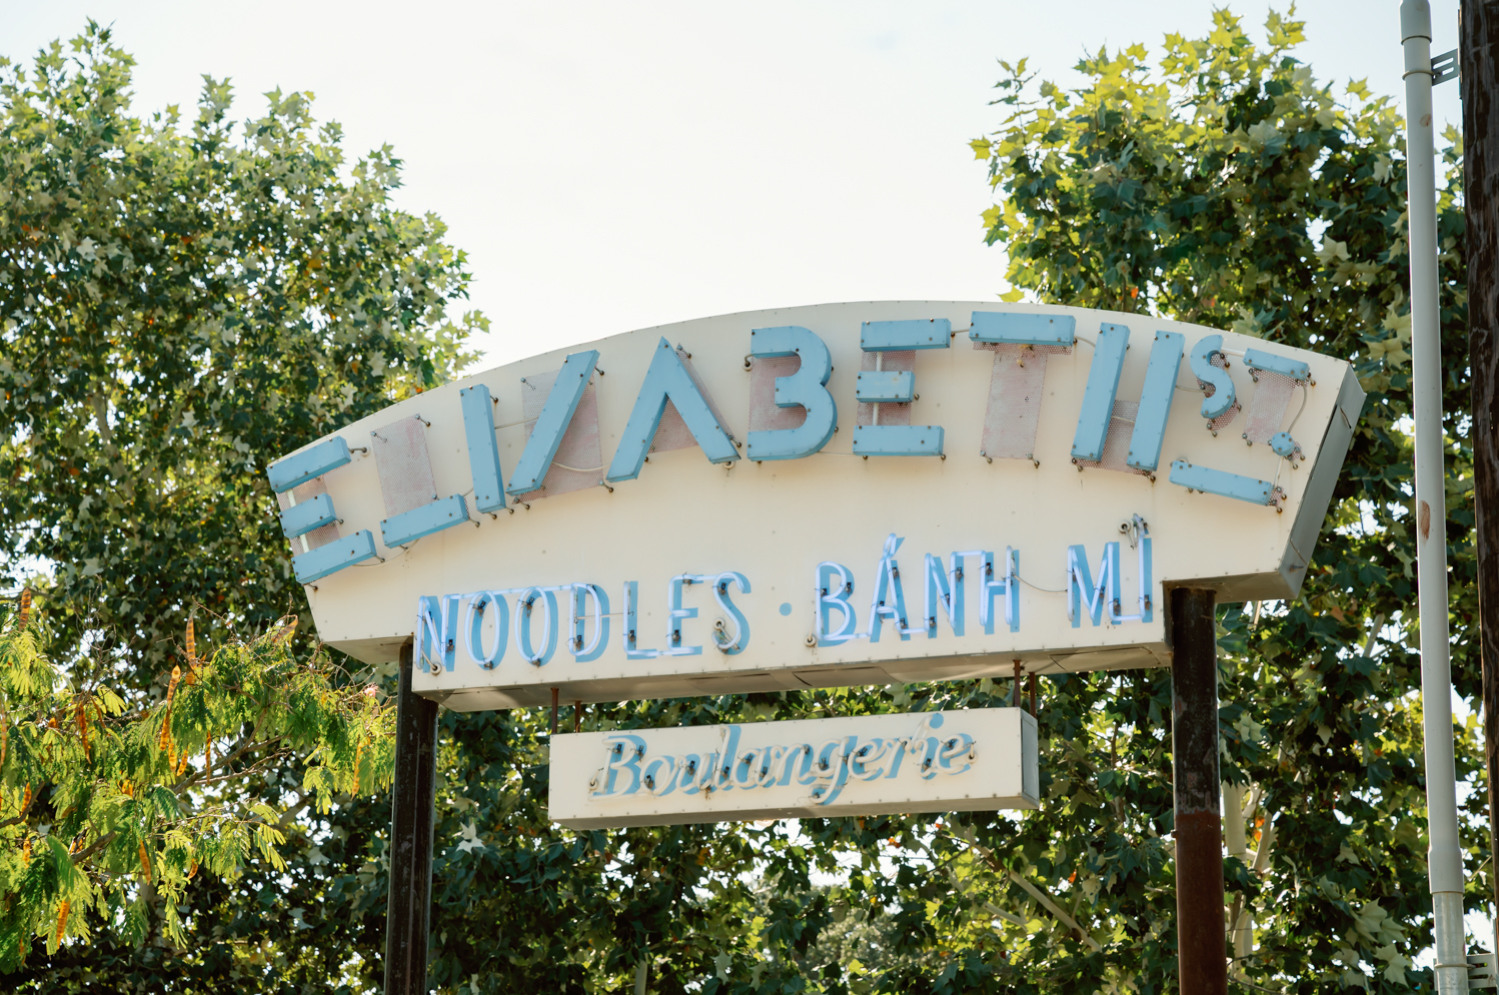 The Elizabeth Street Cafe Sign in Austin, Texas. The sign advertises "noodles, bahn mi, boulangerie"